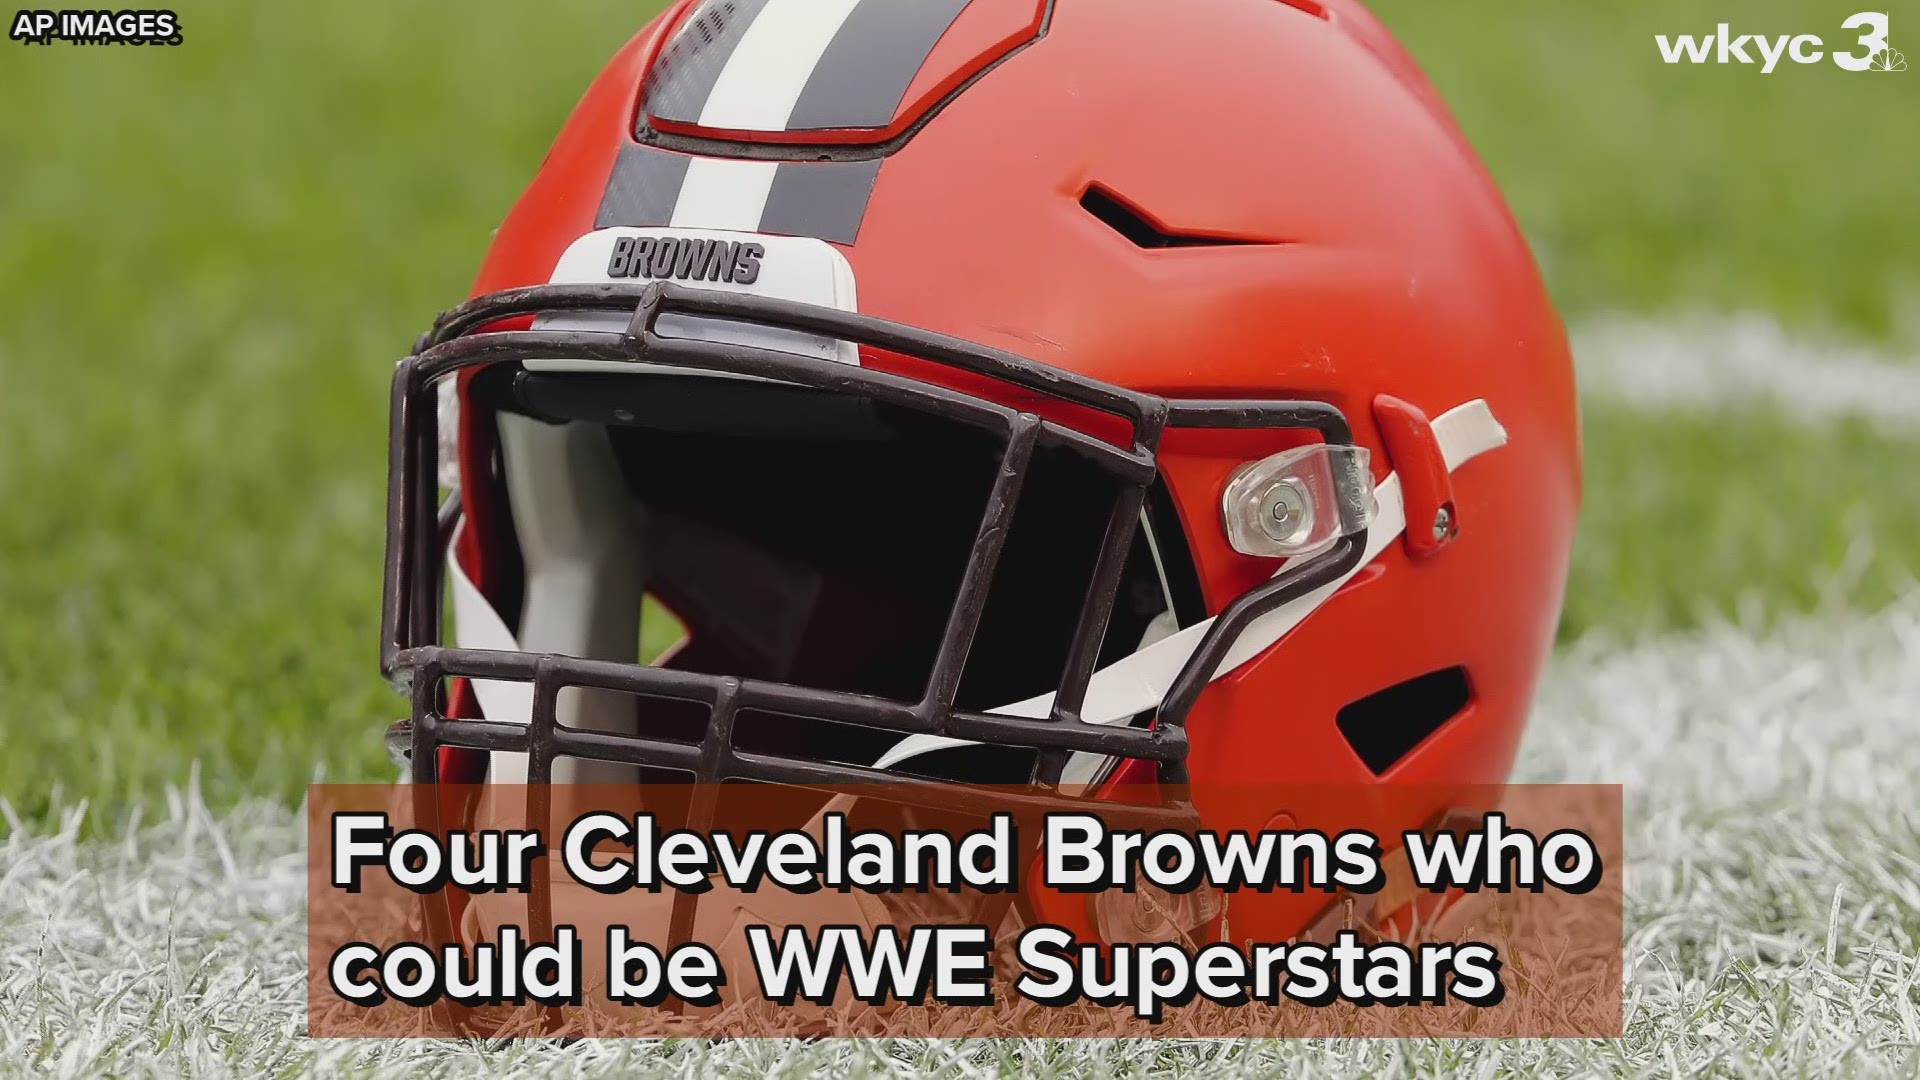 QB Baker Mayfield, Cleveland Browns featured on “WWE Fandom